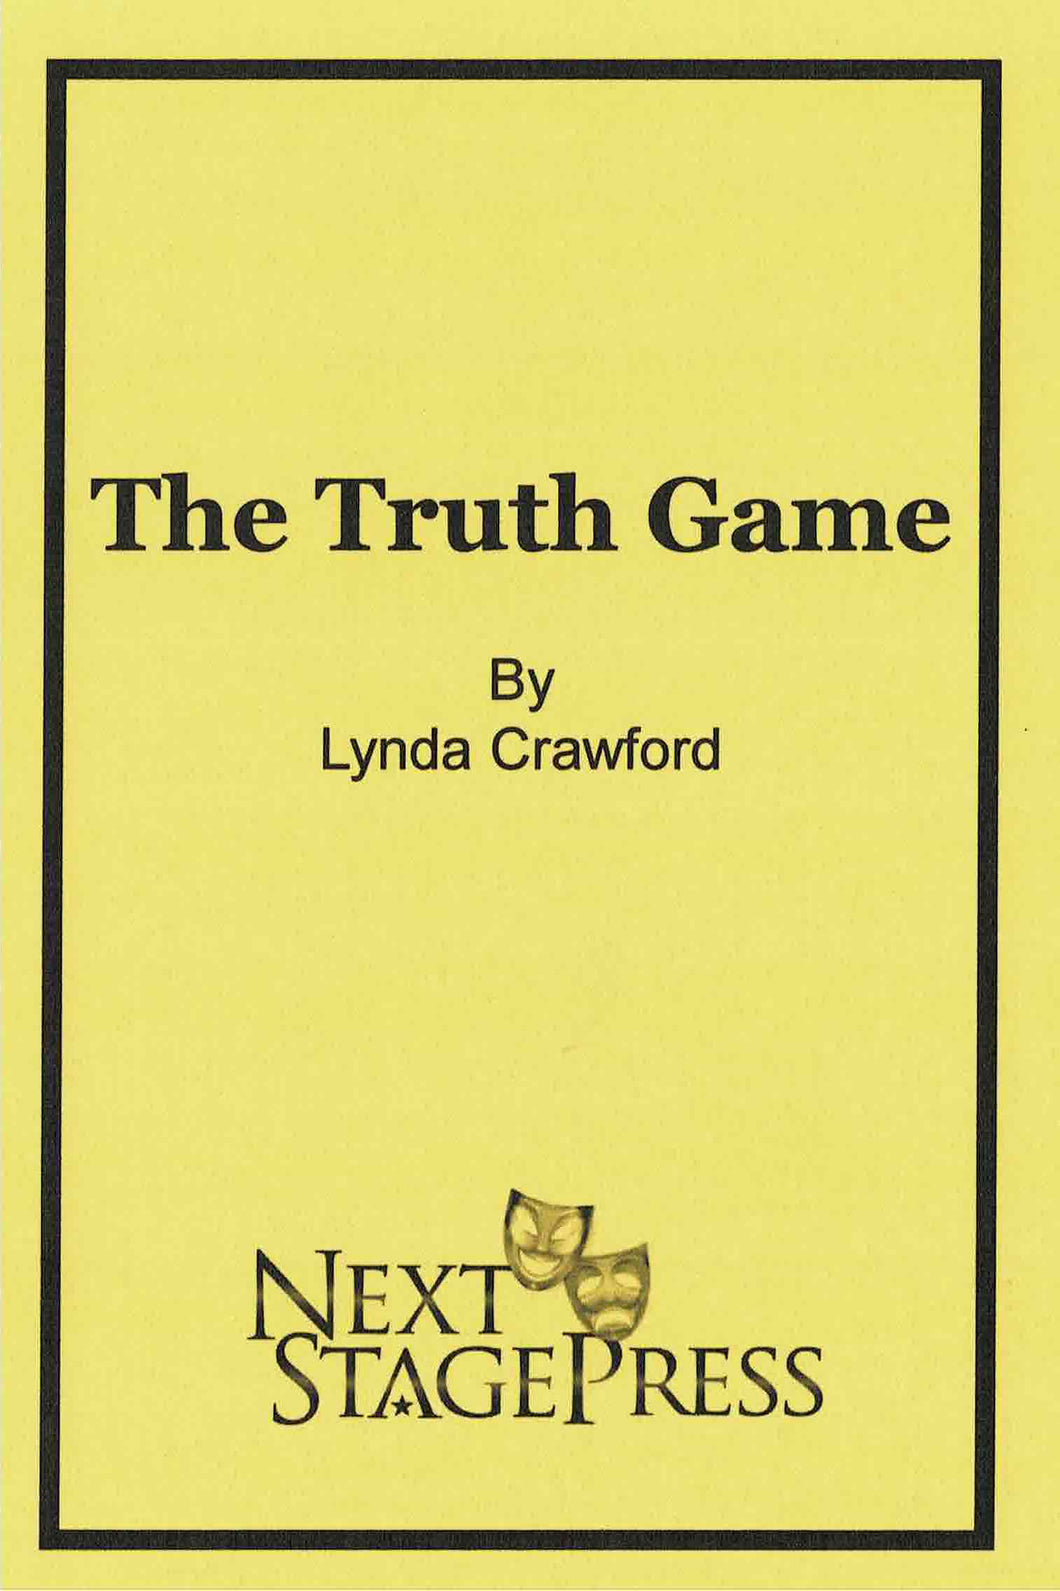 The Truth Game by Lynda Crawford